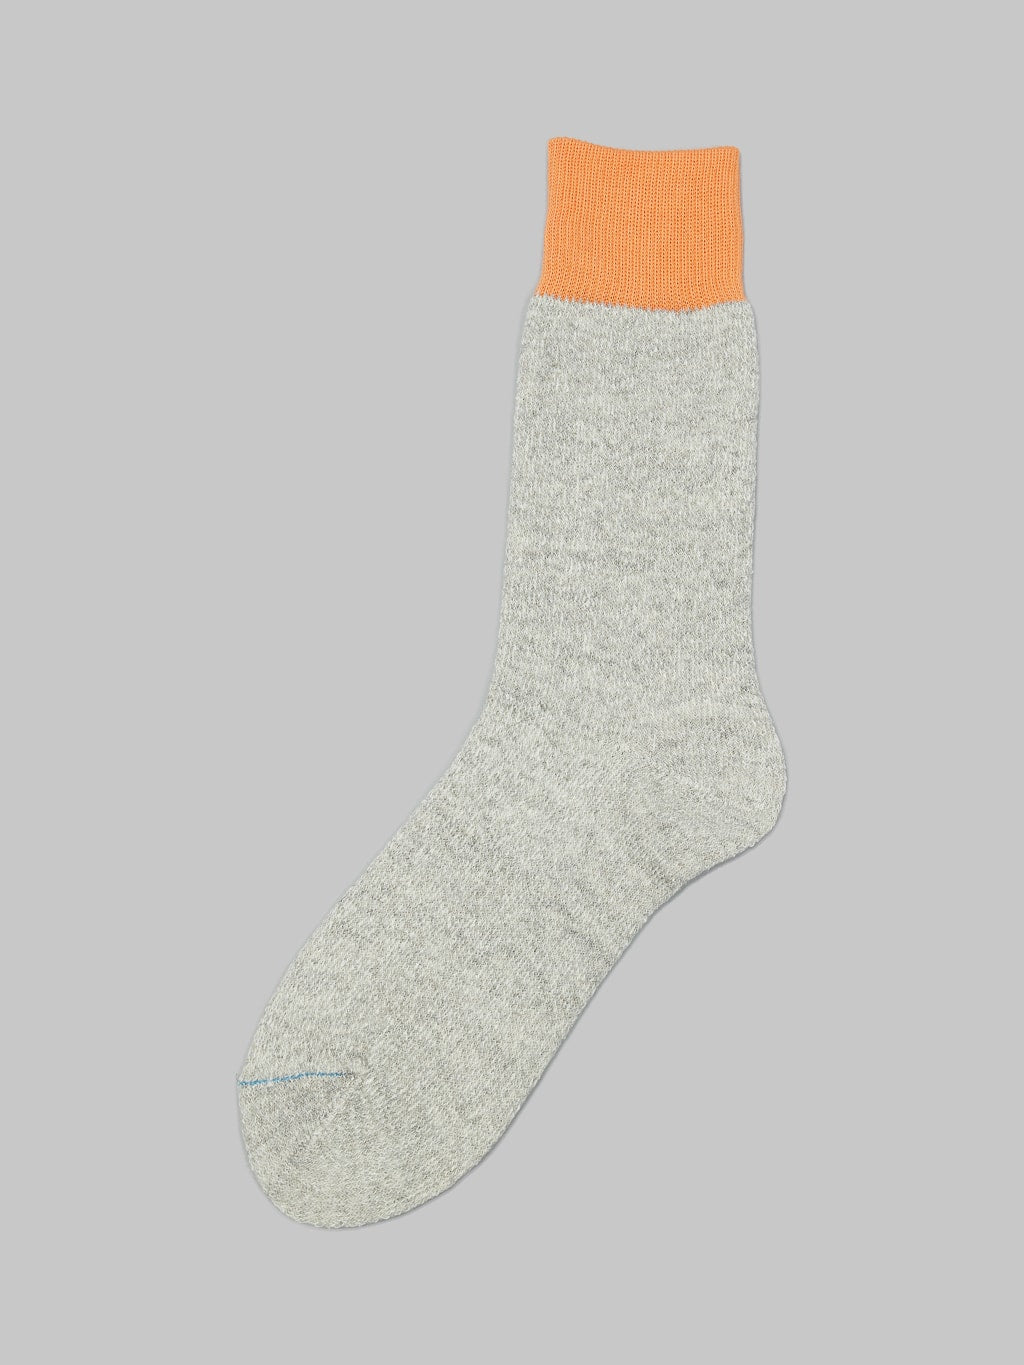 rototo double face crew socks silk cotton orange gray ultra soft